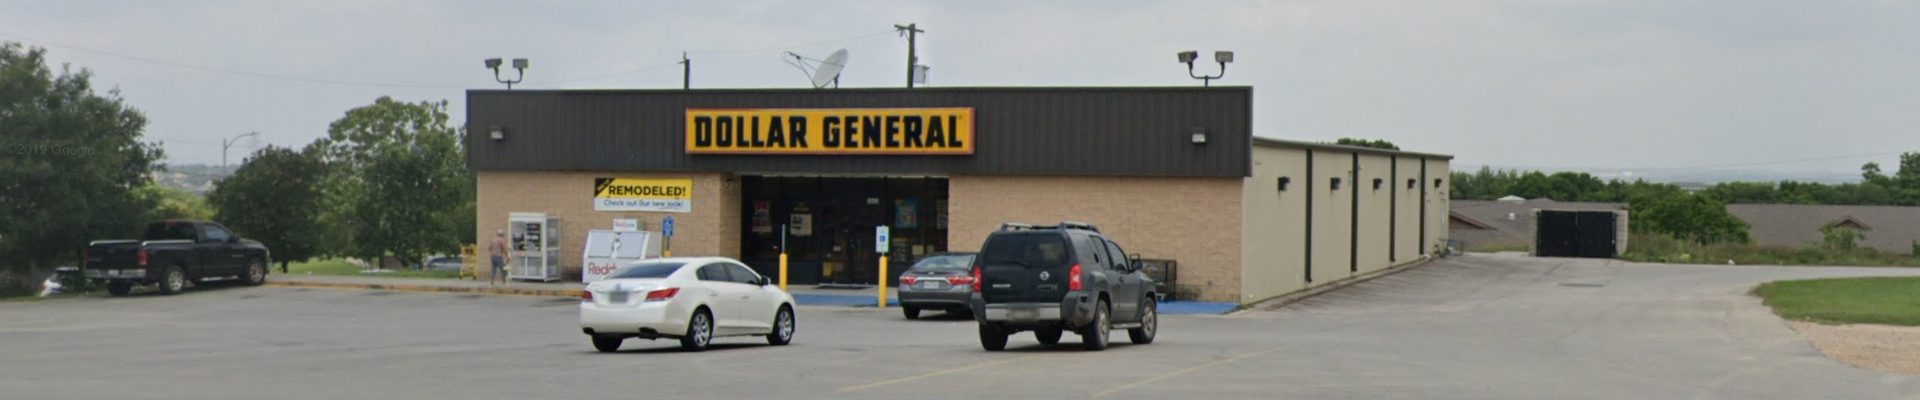 Dollar General (9845) – San Antonio, Texas